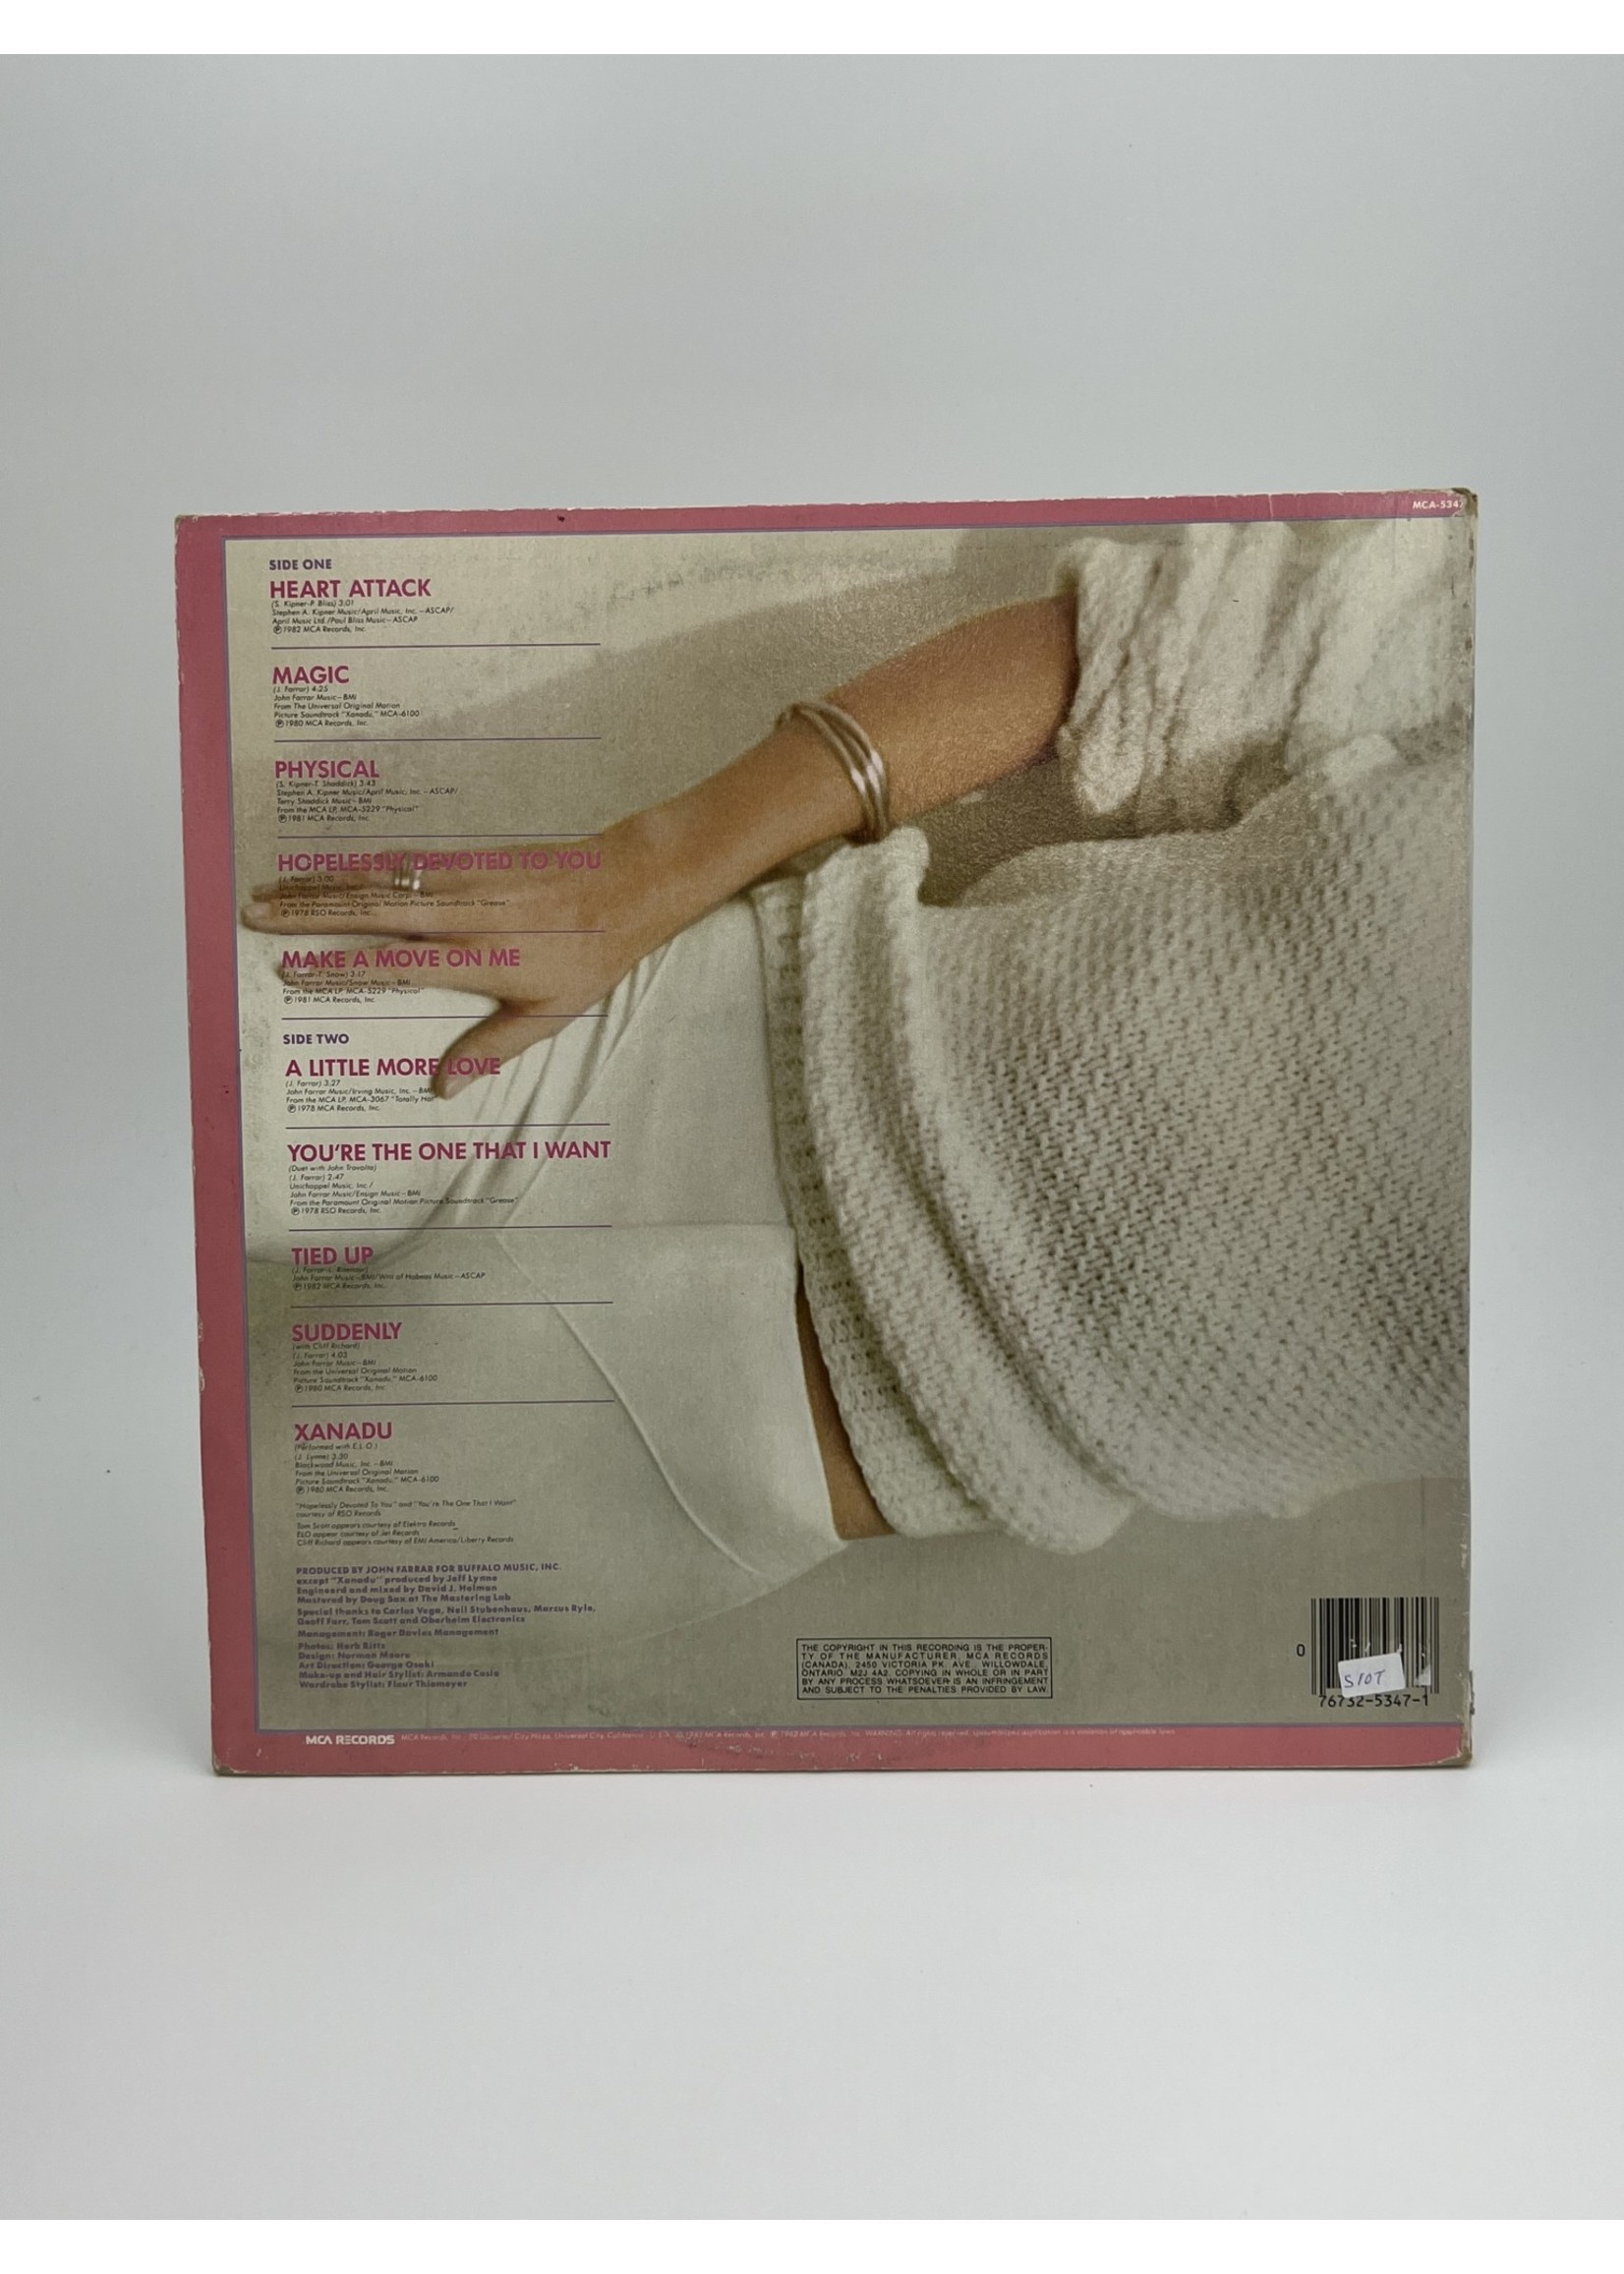 LP Olivia Newton John Greatest Hits Volume 2 var2 LP Record